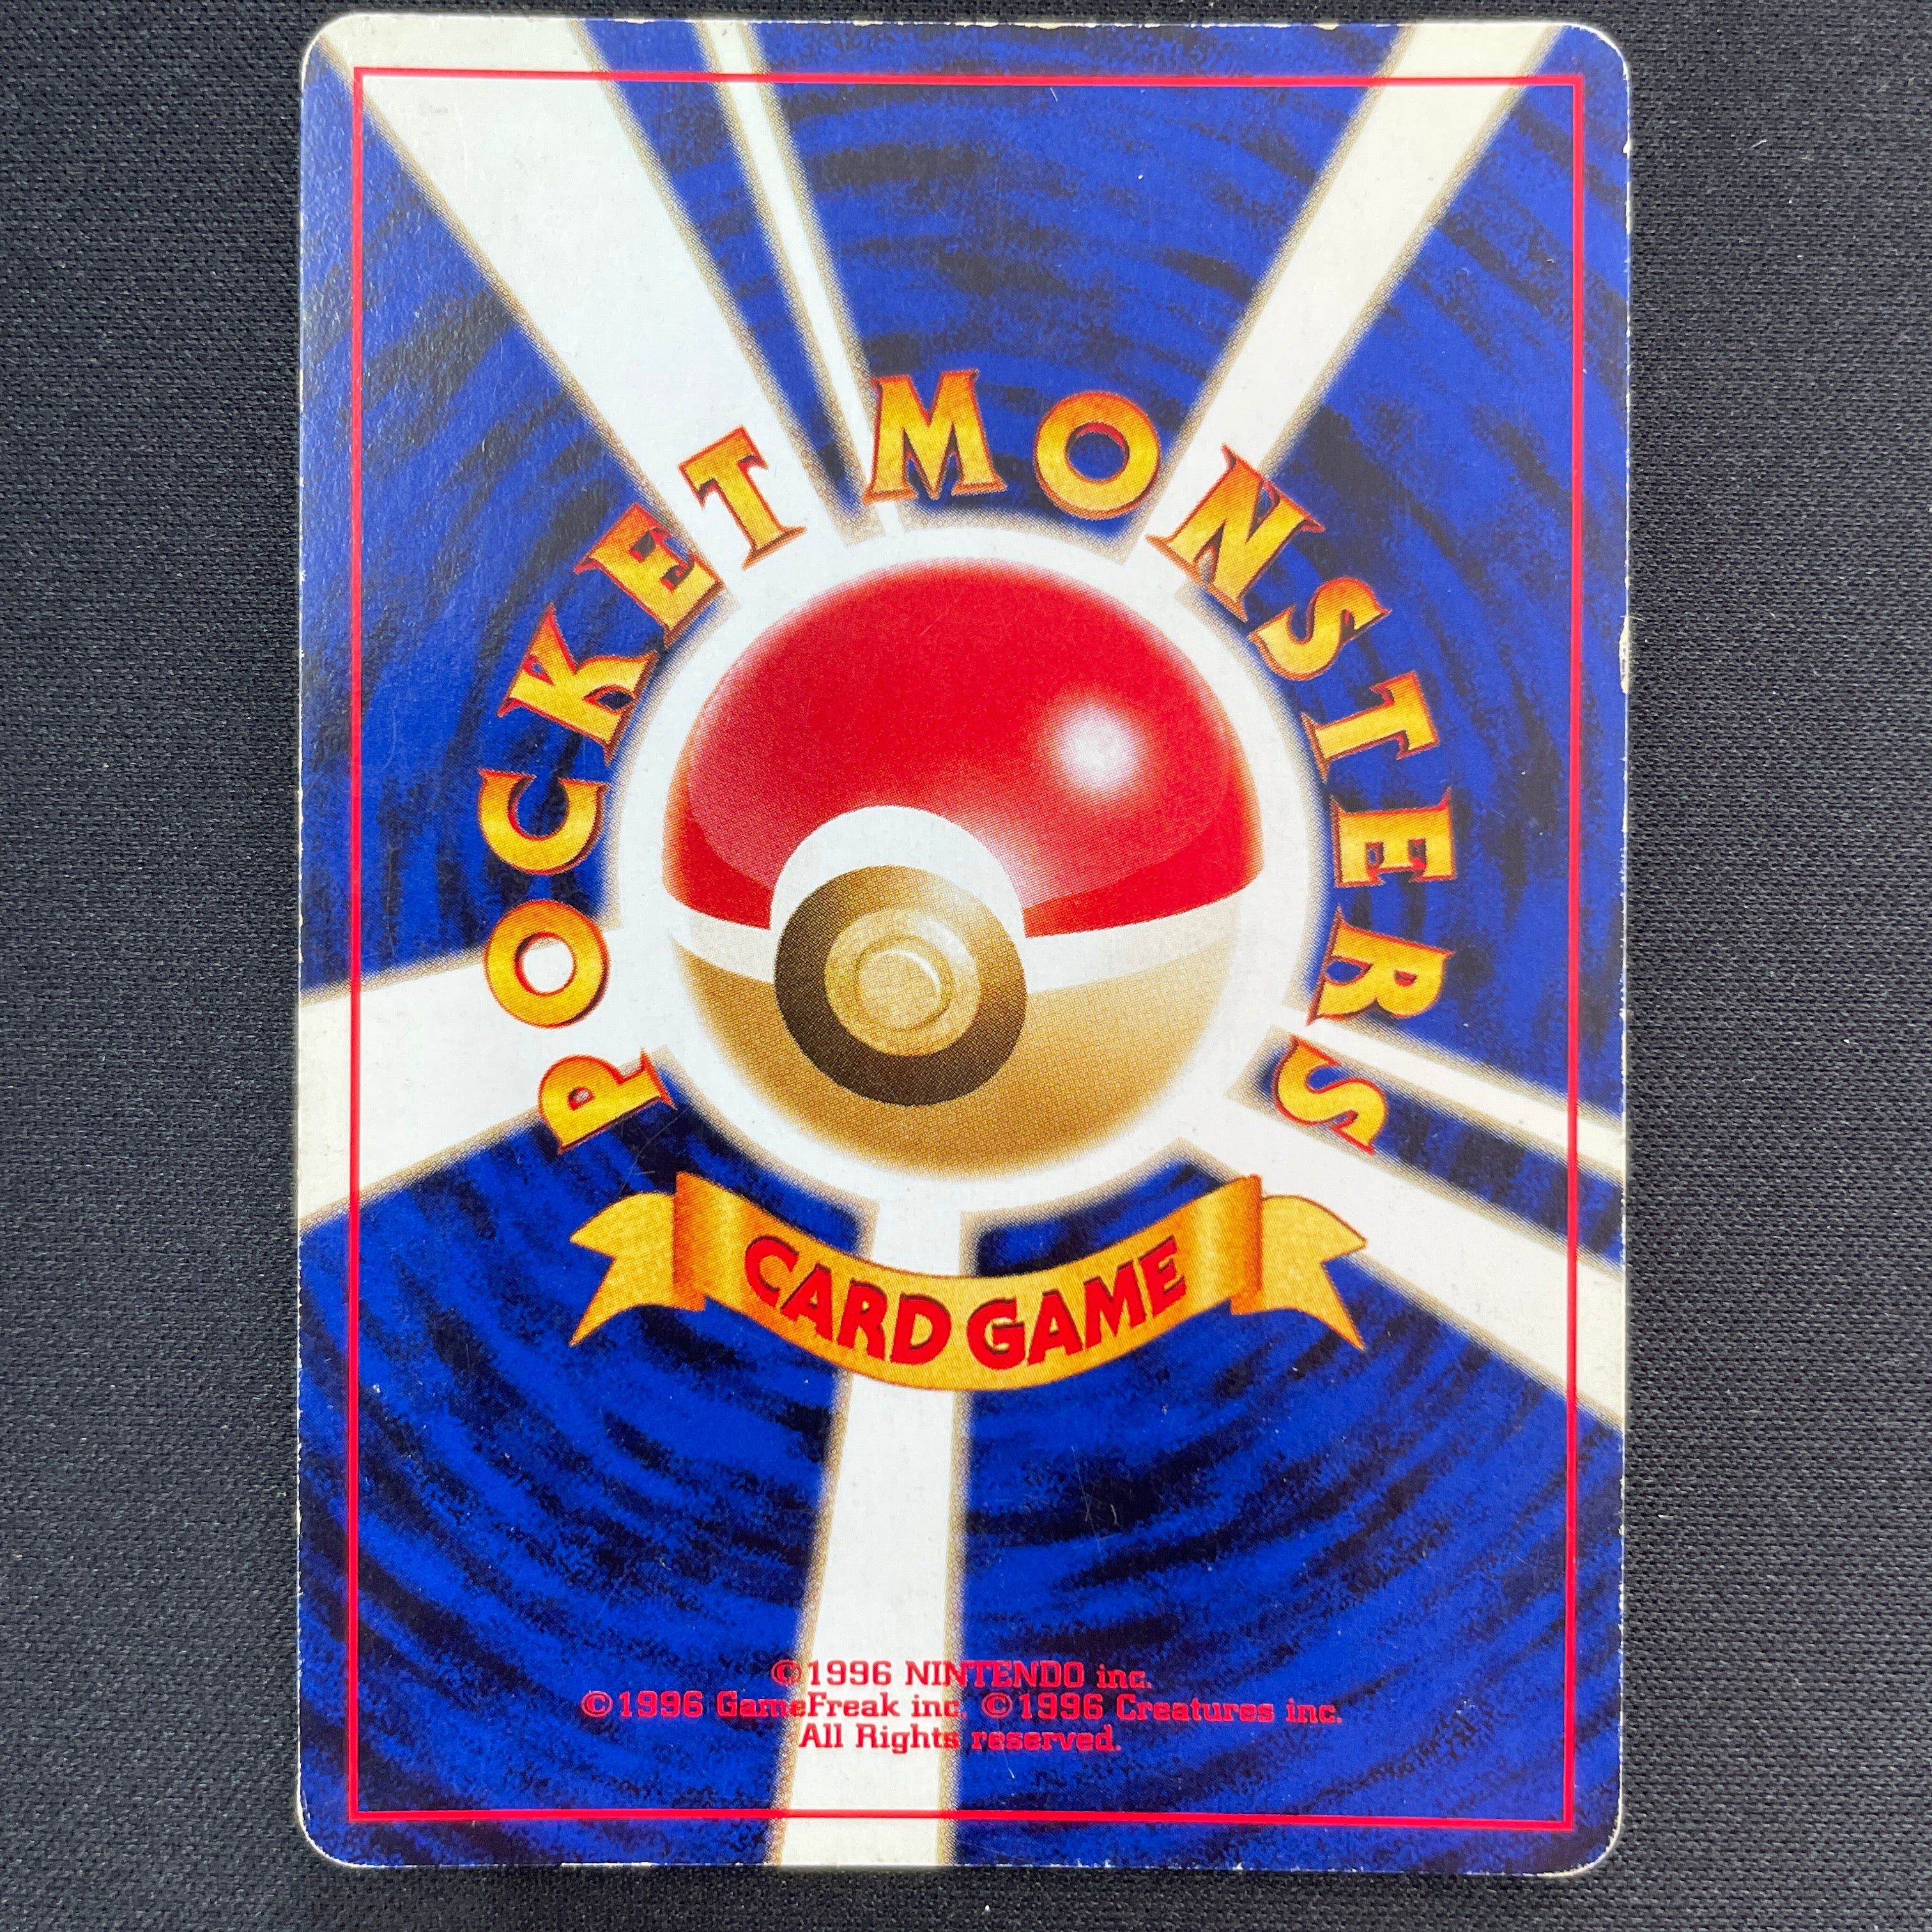 Pokémon Card Game Lizardon No. 006